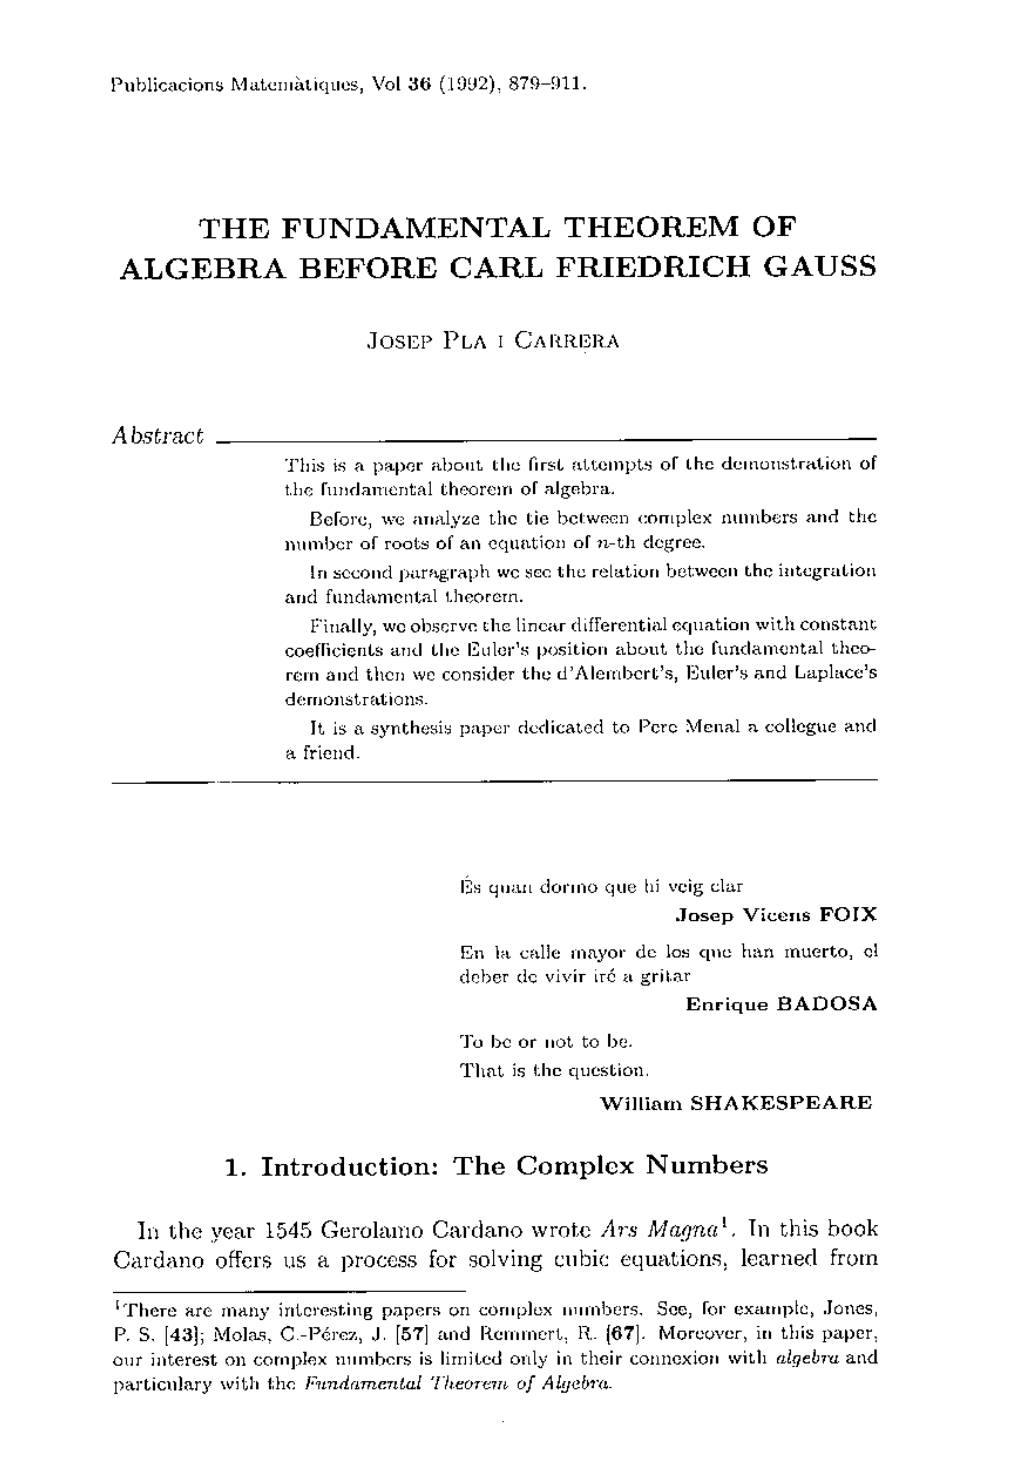 The Fundamental Theorem of Álgebra Before Carl Friedrich Gauss